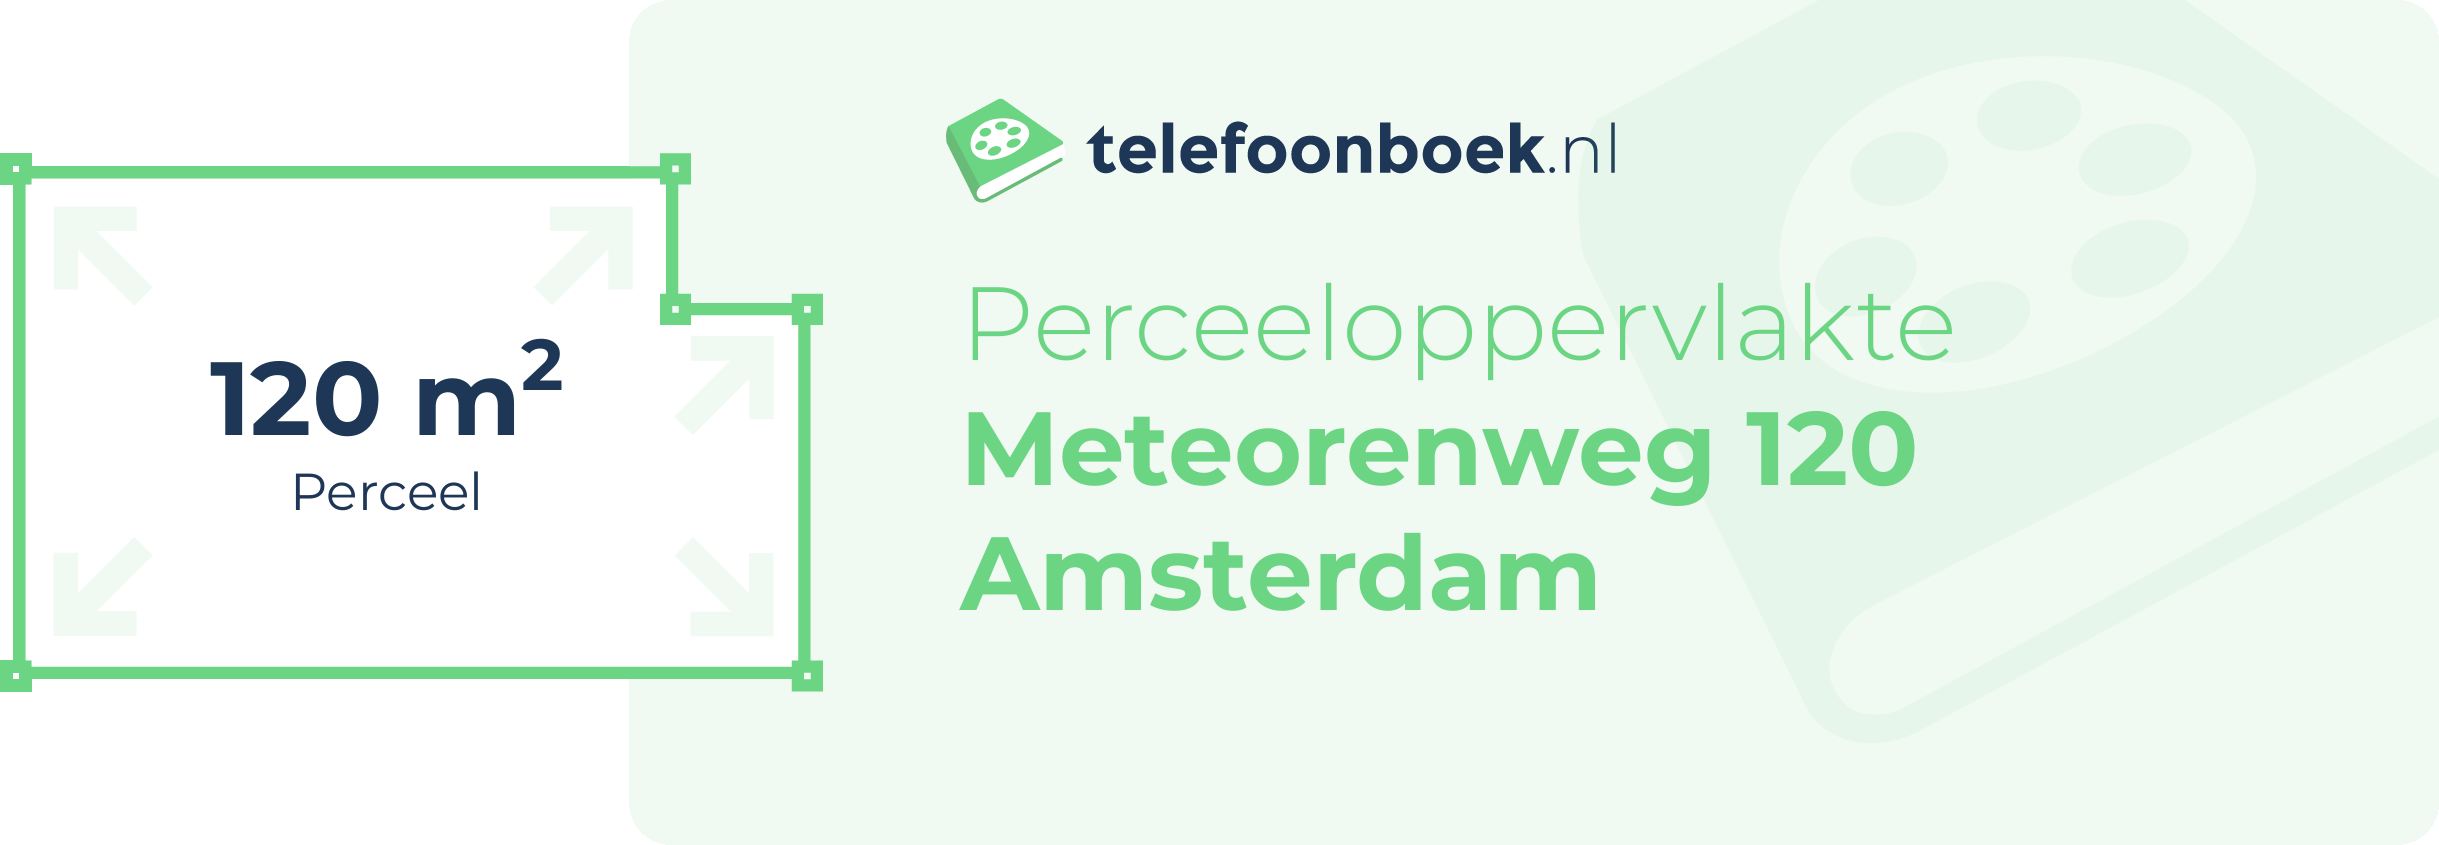 Perceeloppervlakte Meteorenweg 120 Amsterdam